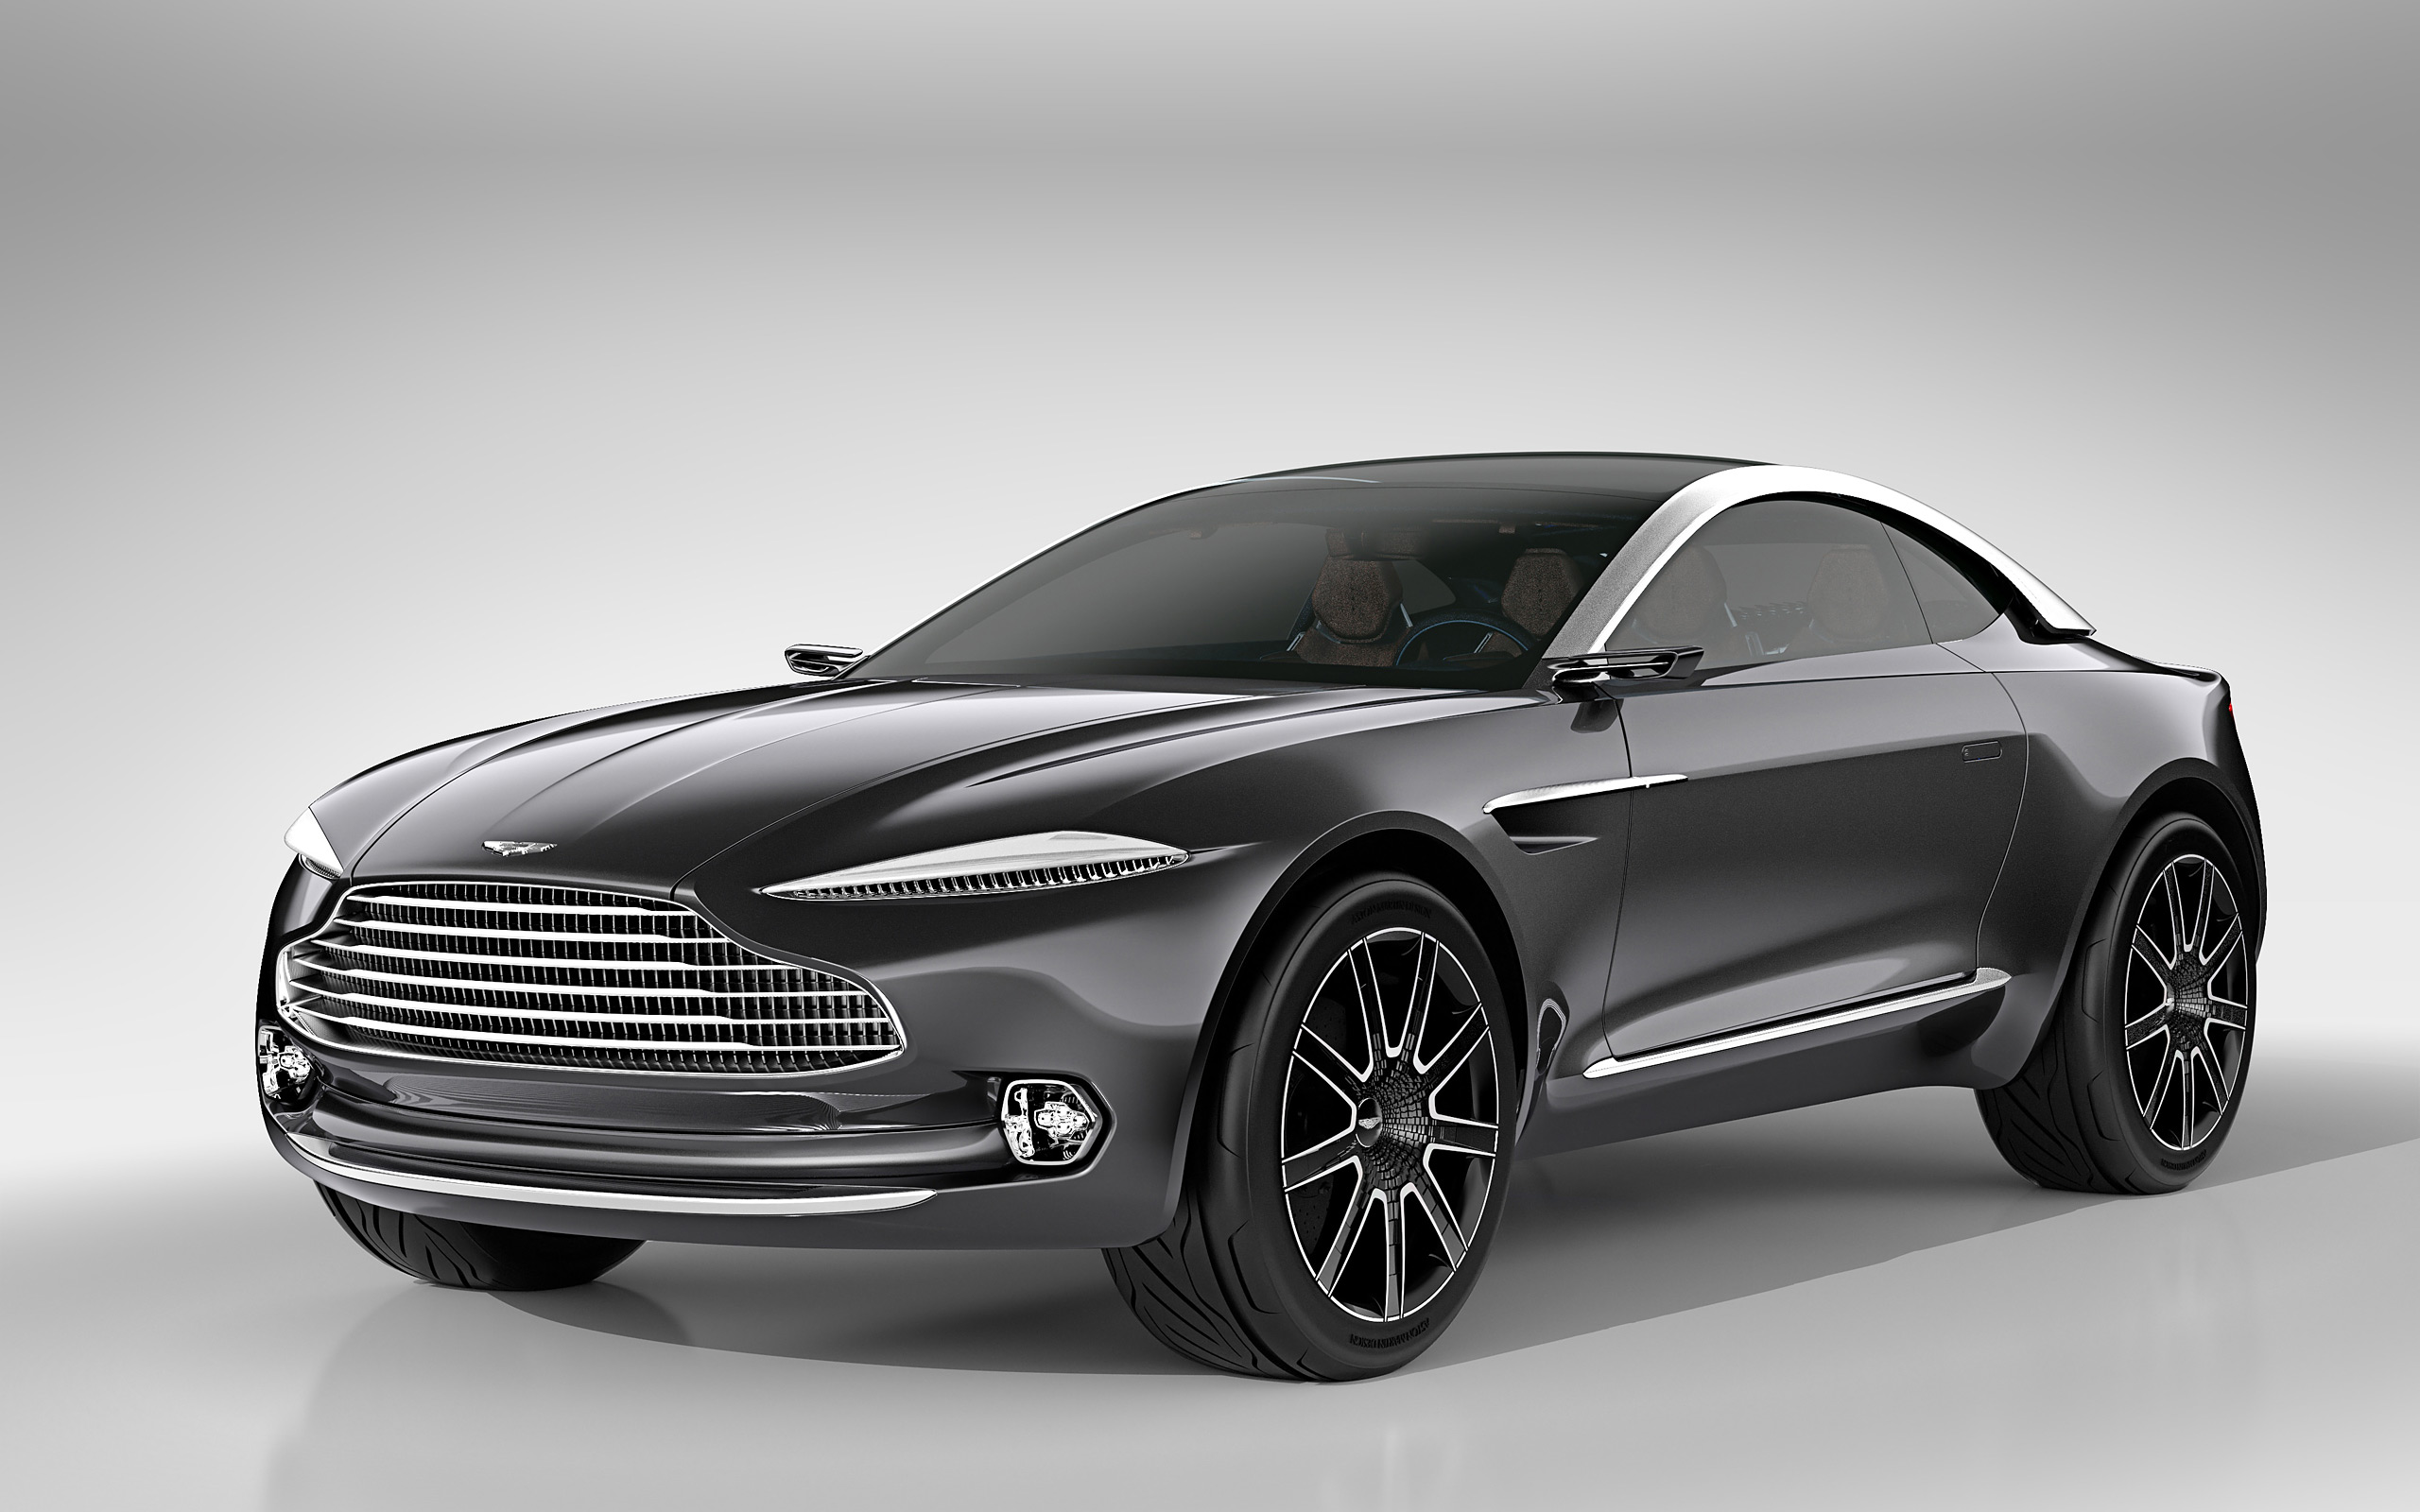  2015 Aston Martin DBX Concept Wallpaper.